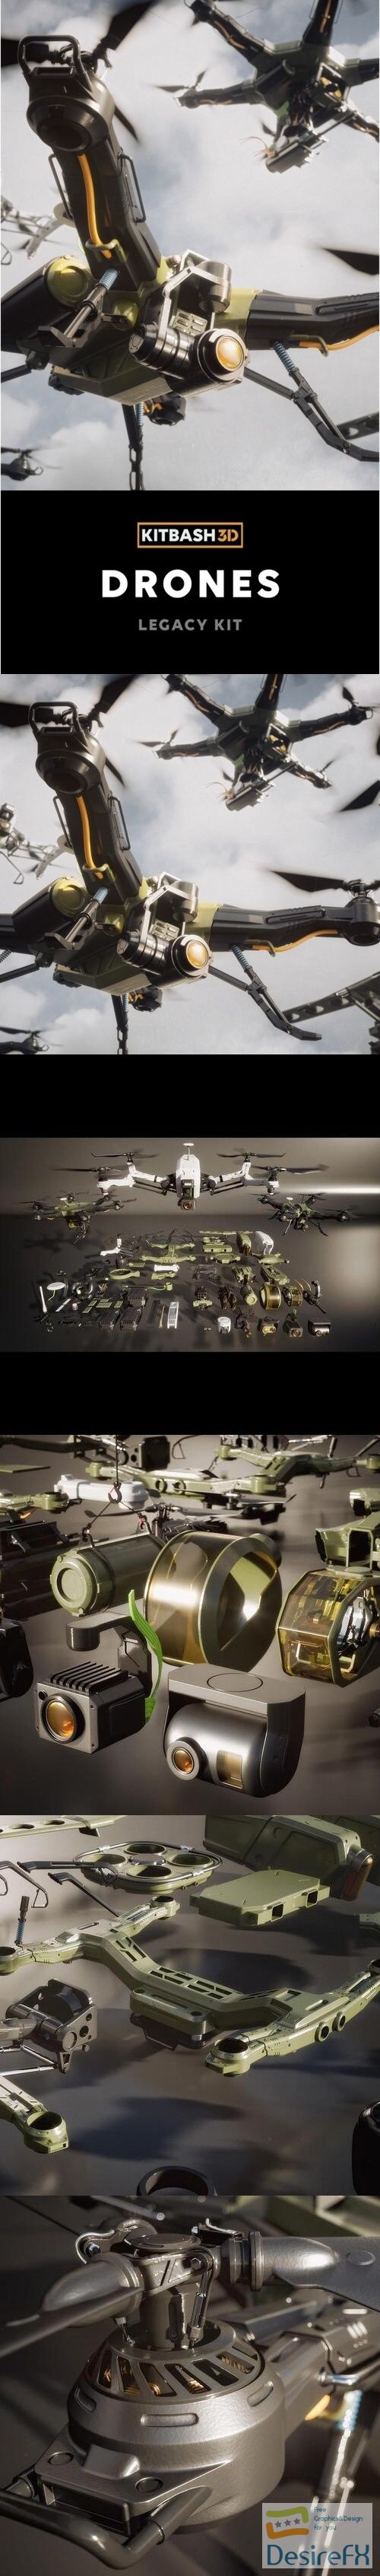 Kitbash3d Vehicles - Drones 3D Models